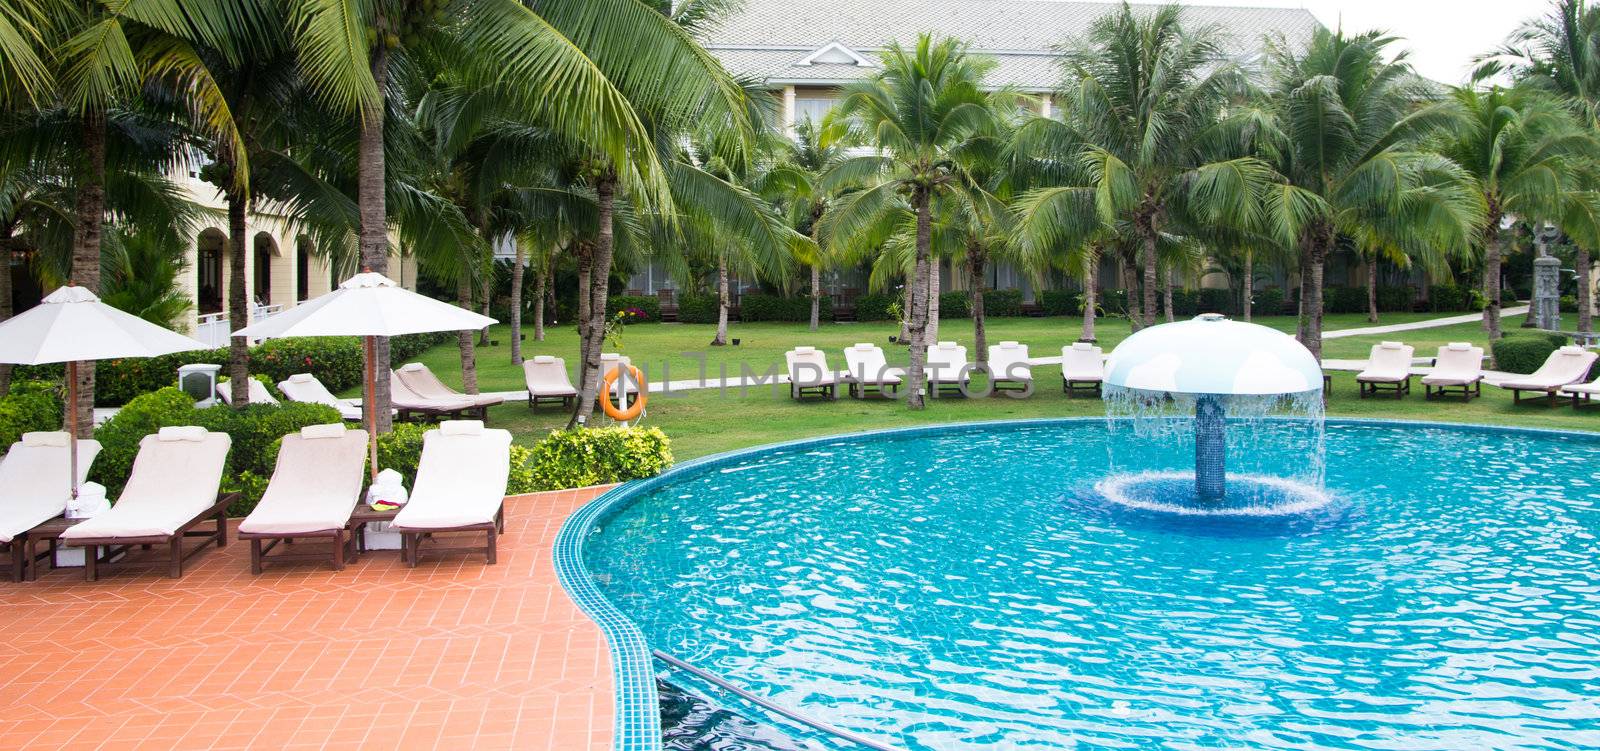 Beautiful swimming pool in Thailand 